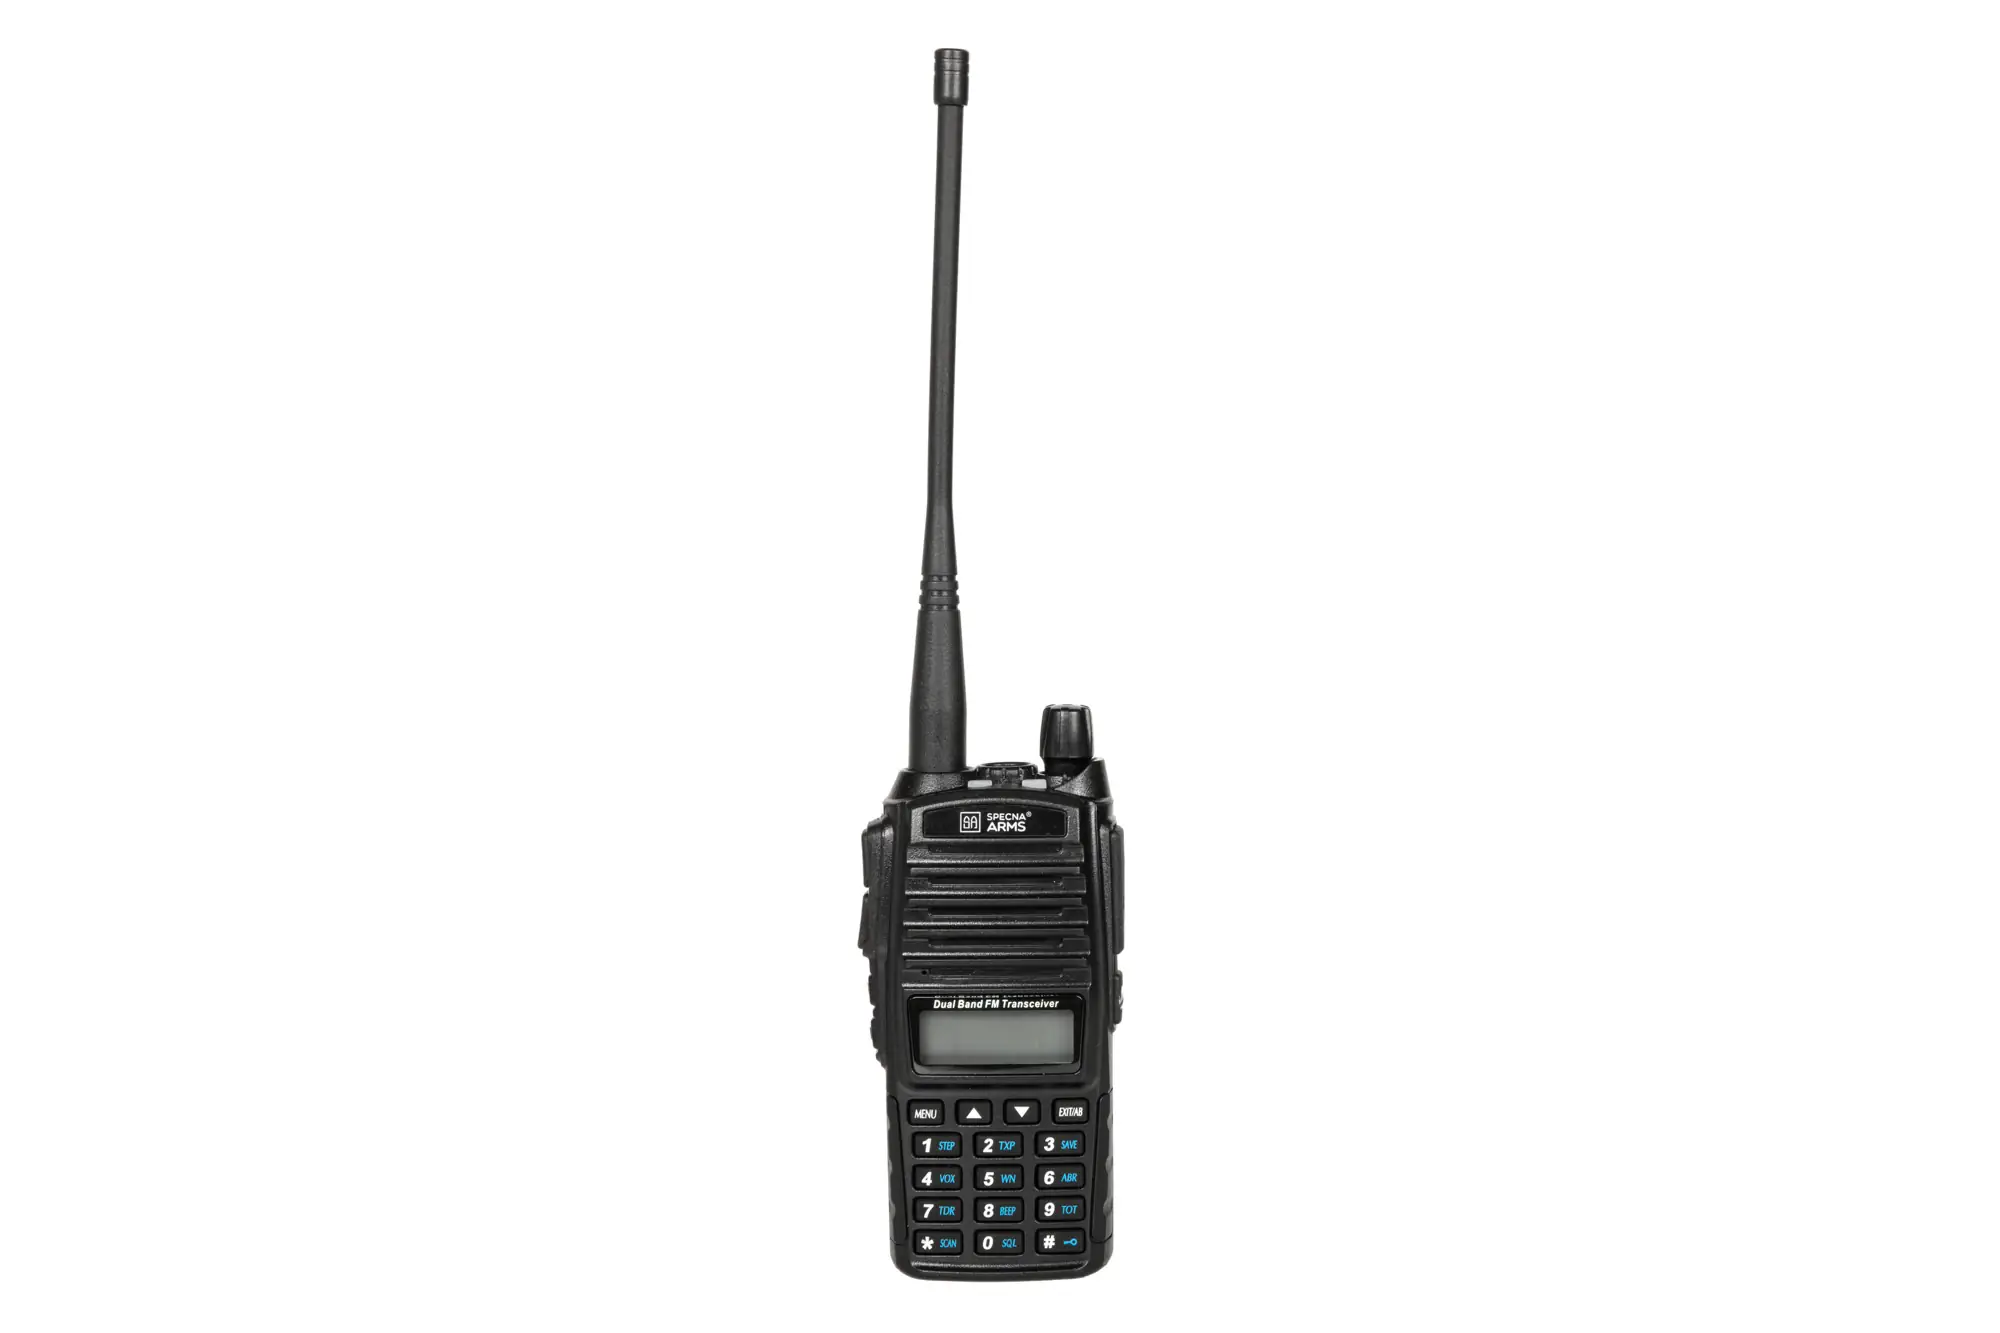 Specna Arms Dual band Shortie 82 radio (VHF/UHF)